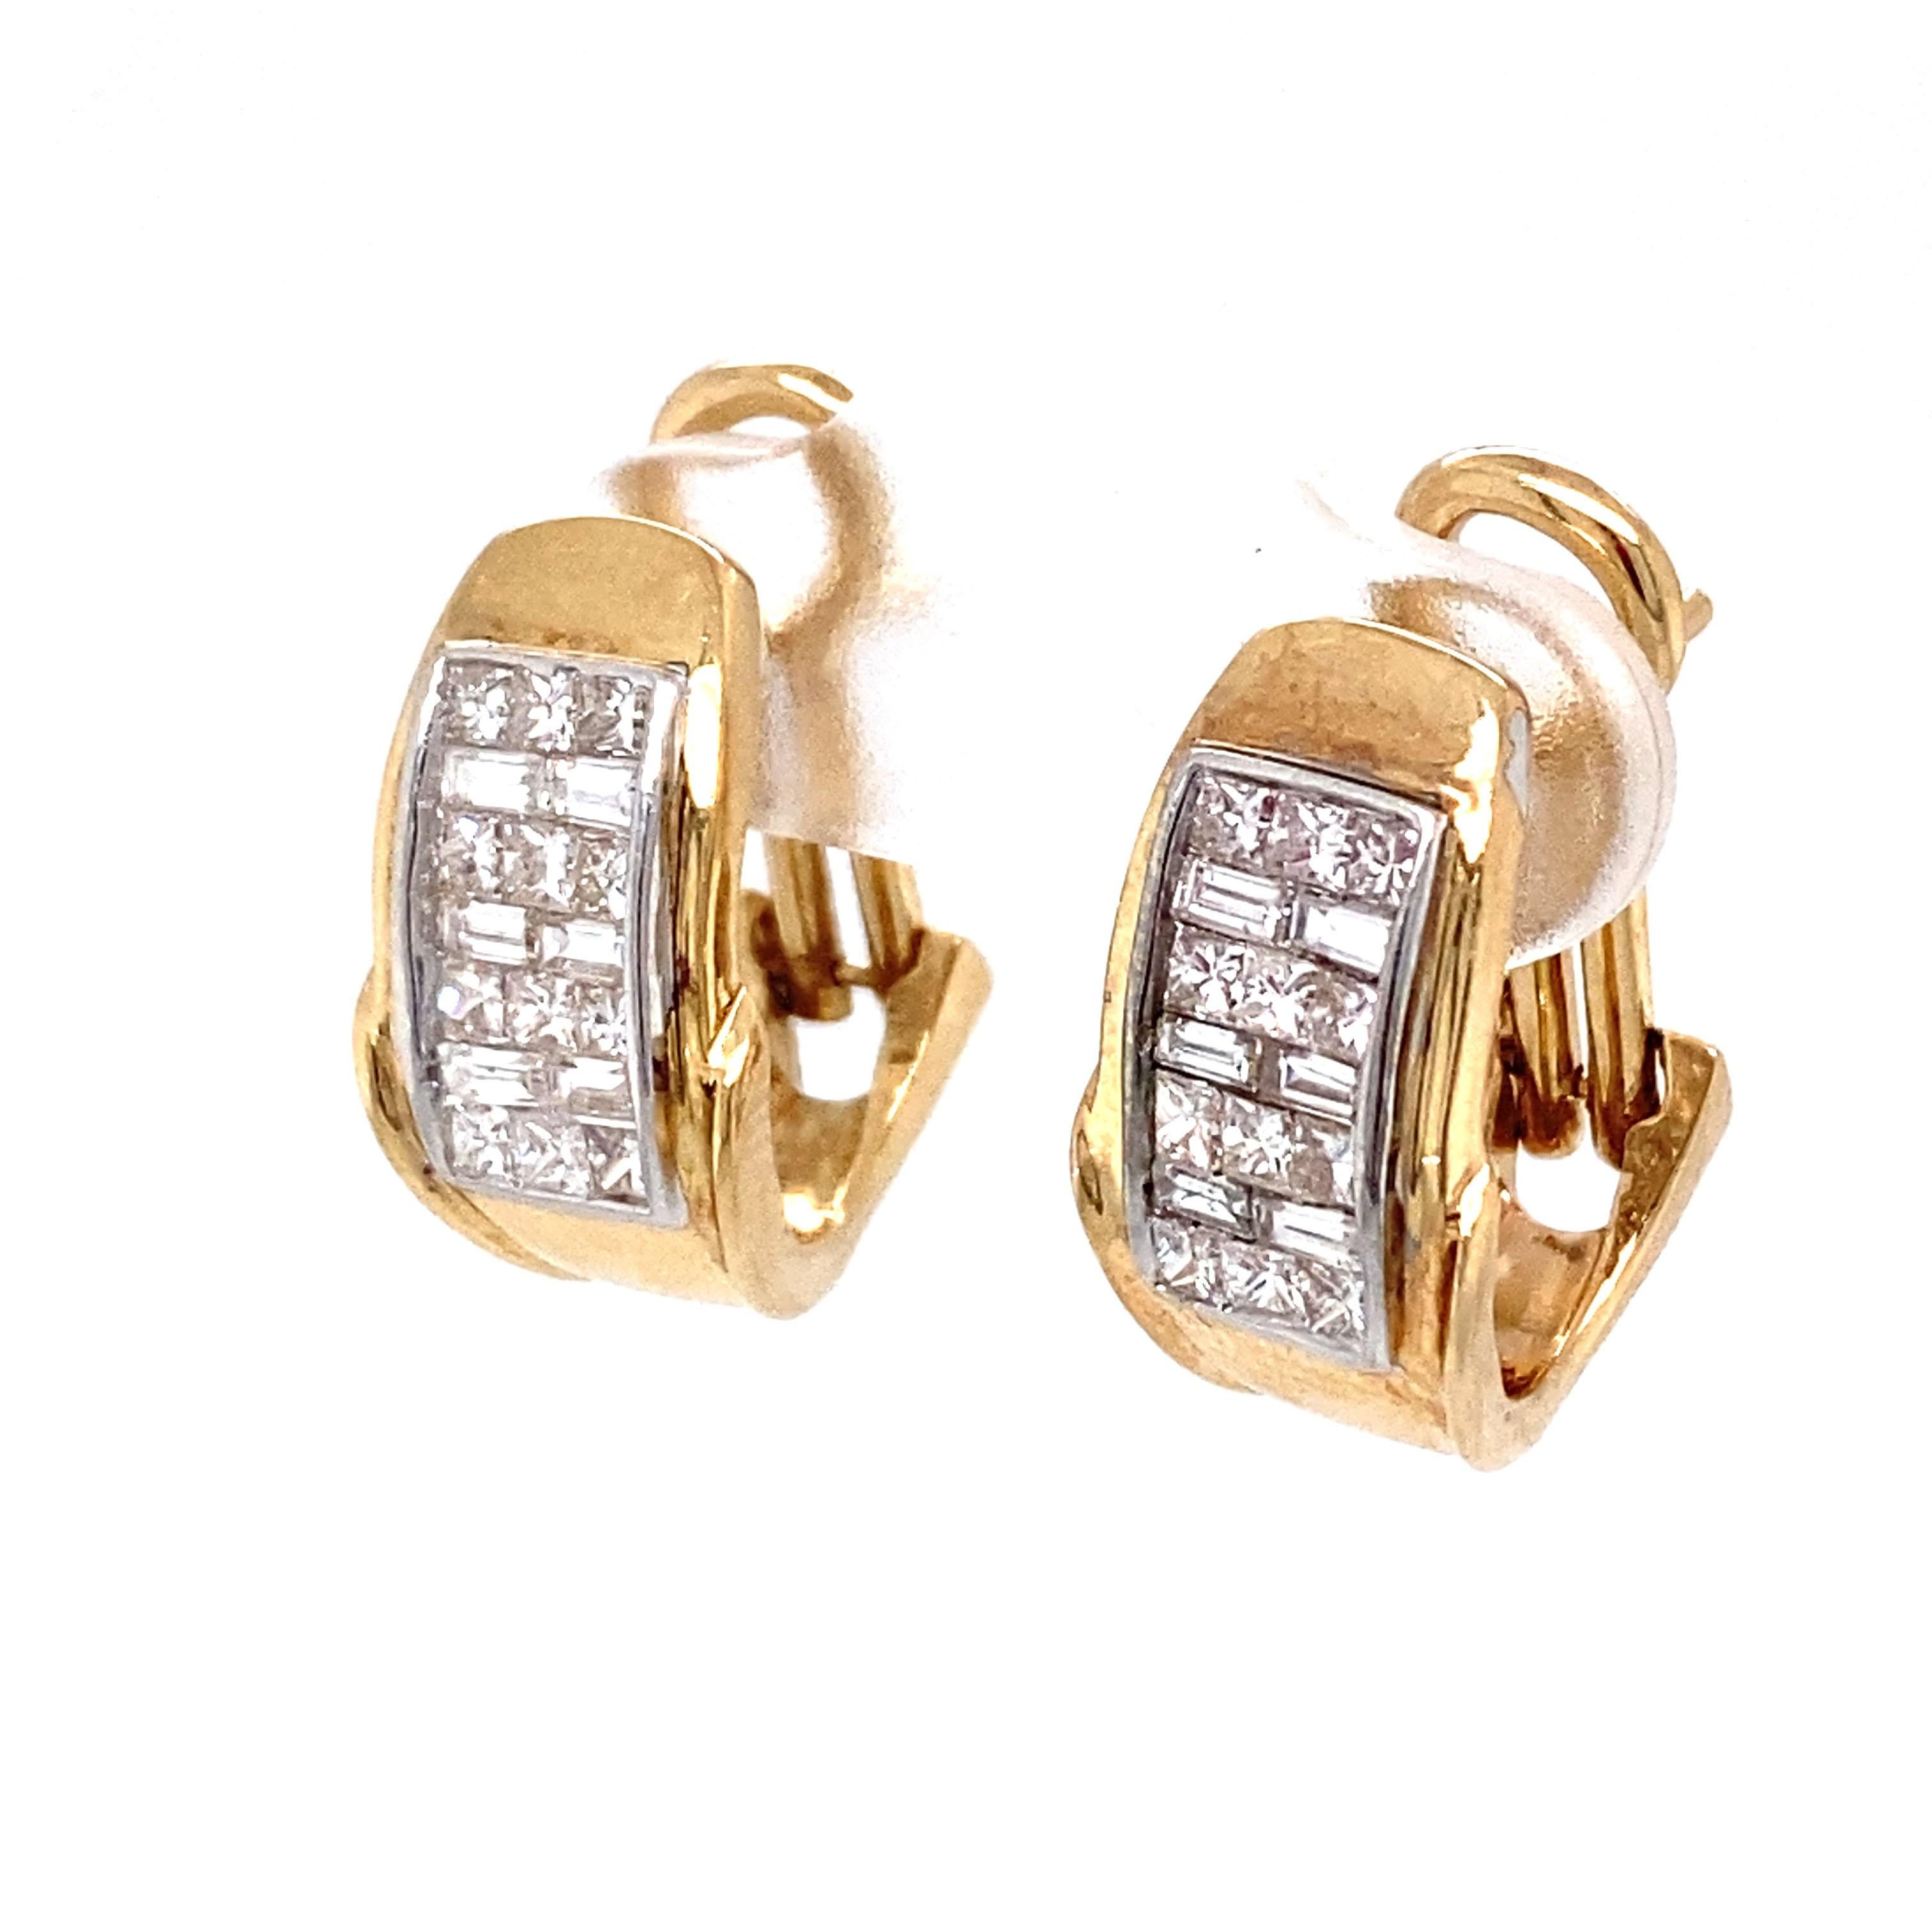 Women's 1980s Baguette and Princess Cut Diamond Earrings in 14 Karat Gold For Sale